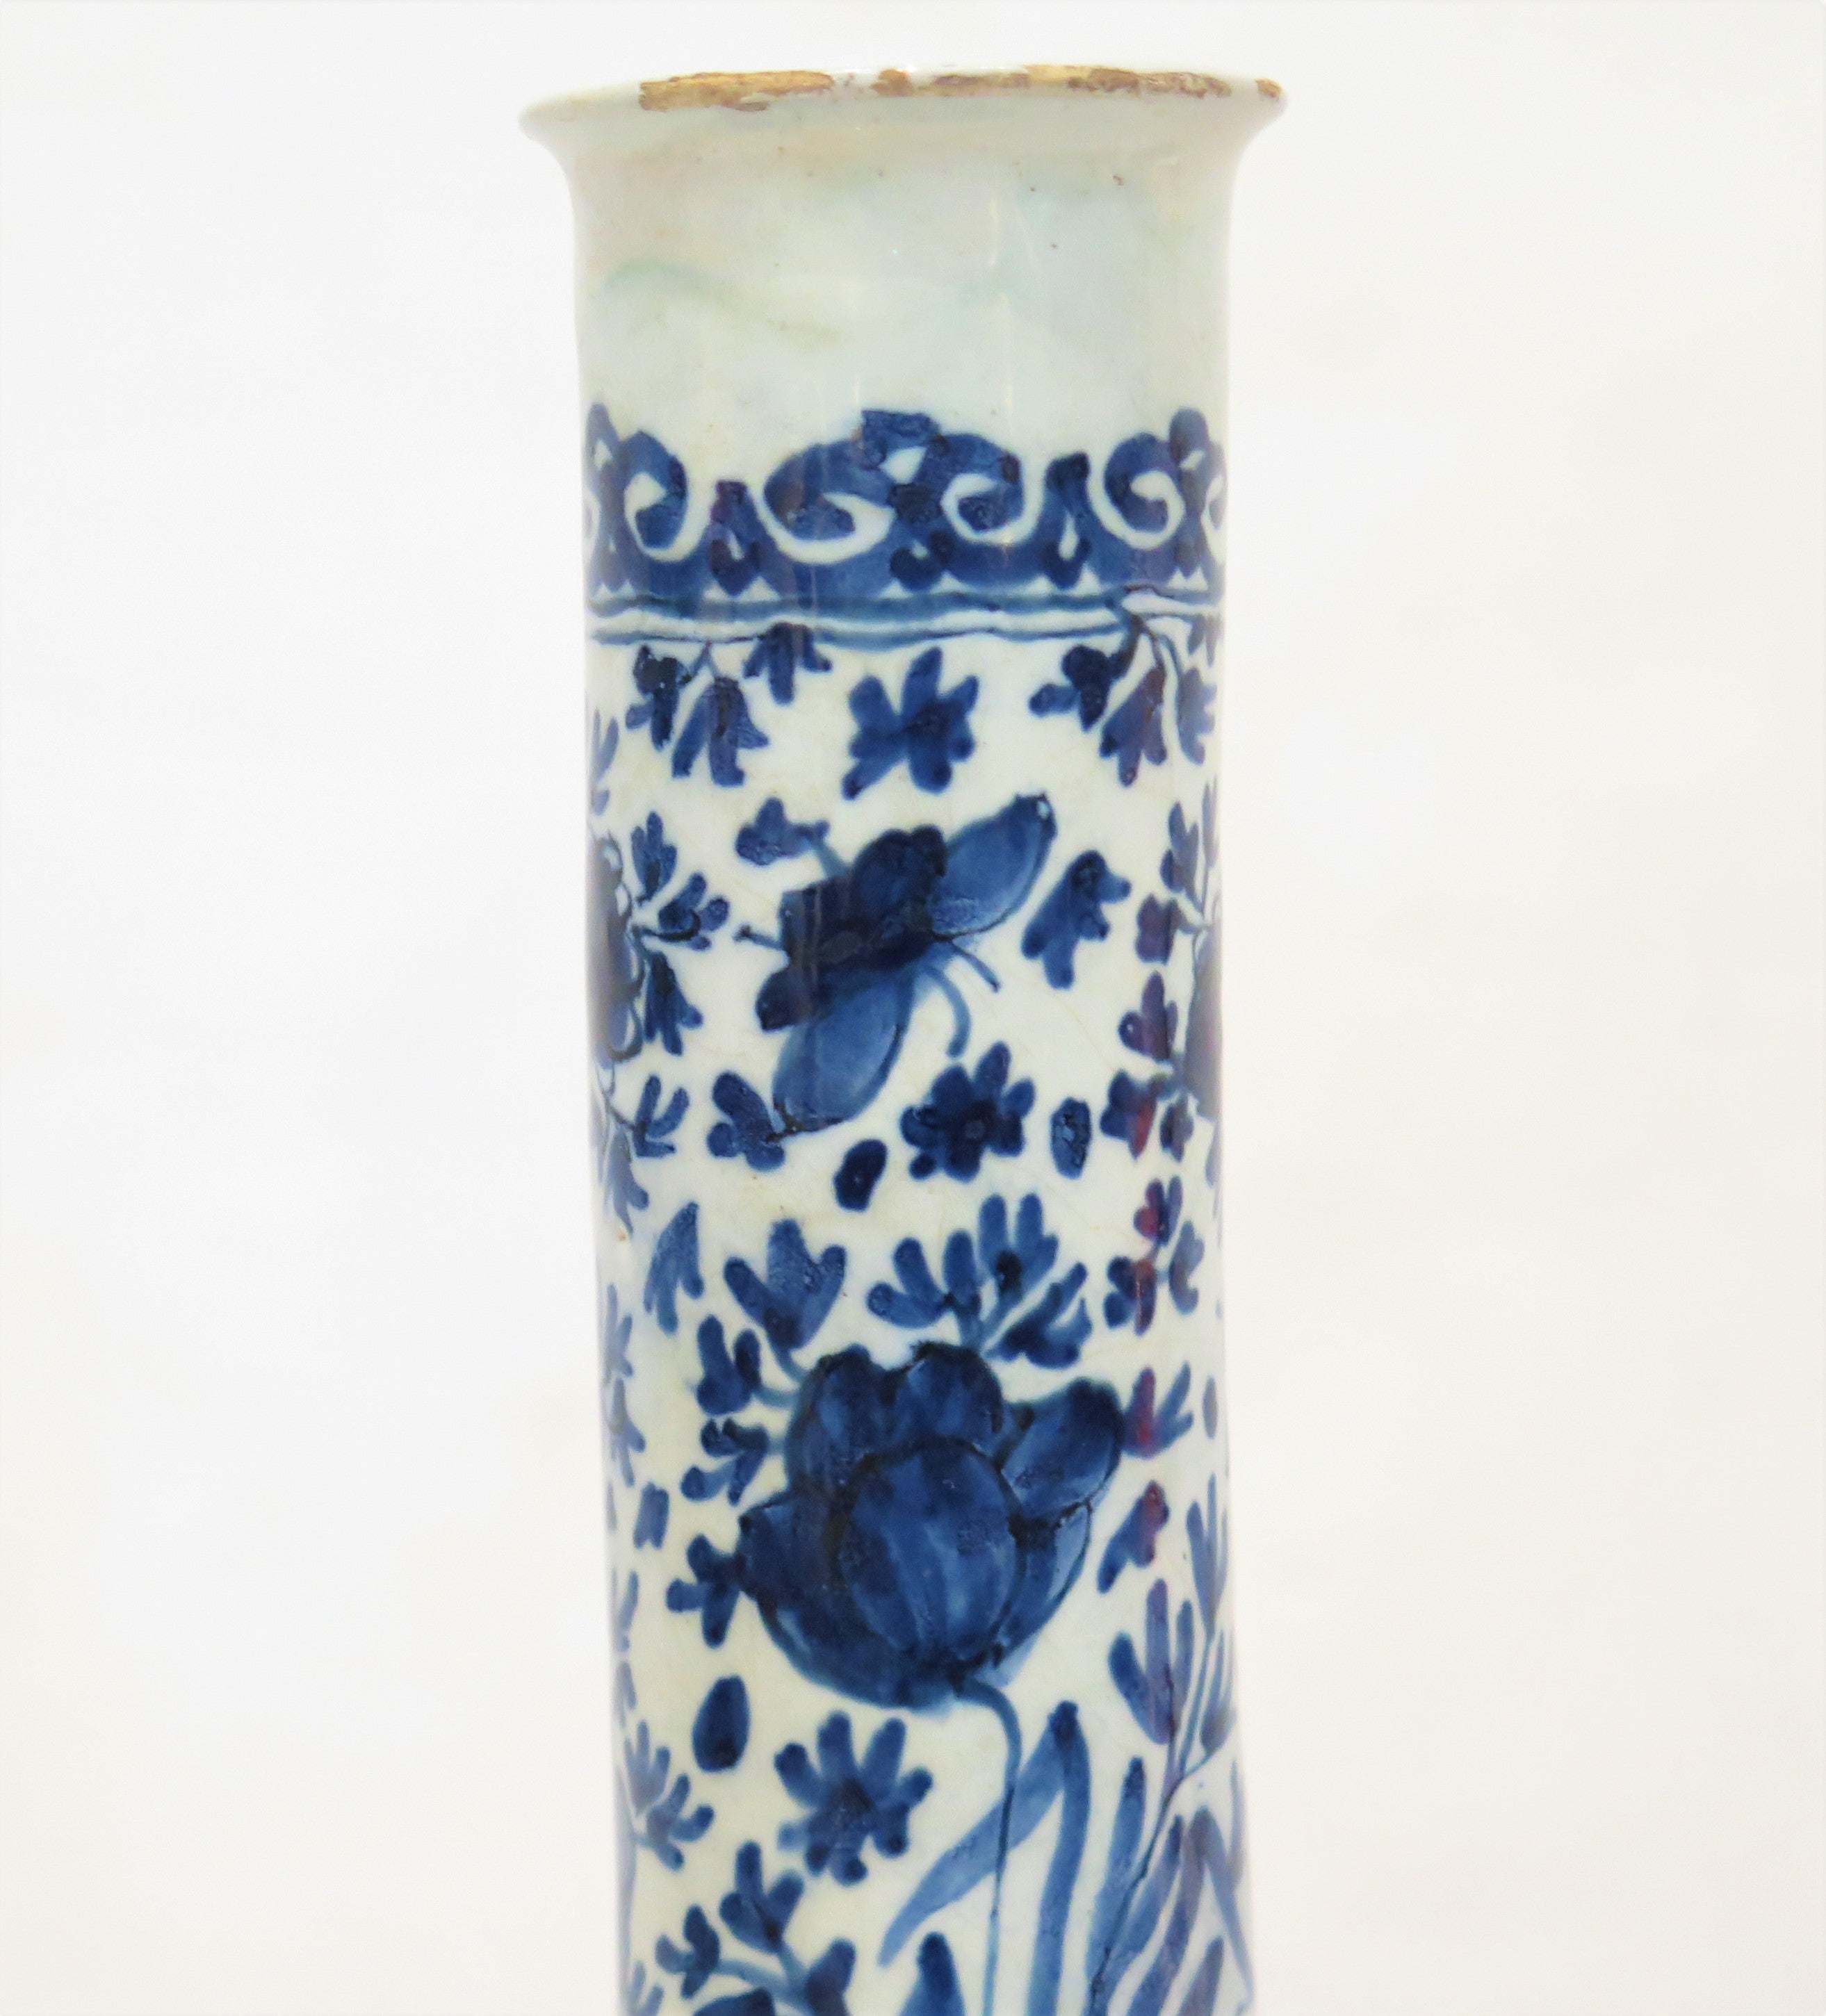 Pair of Dutch Delft Blue and White Bottle Vases